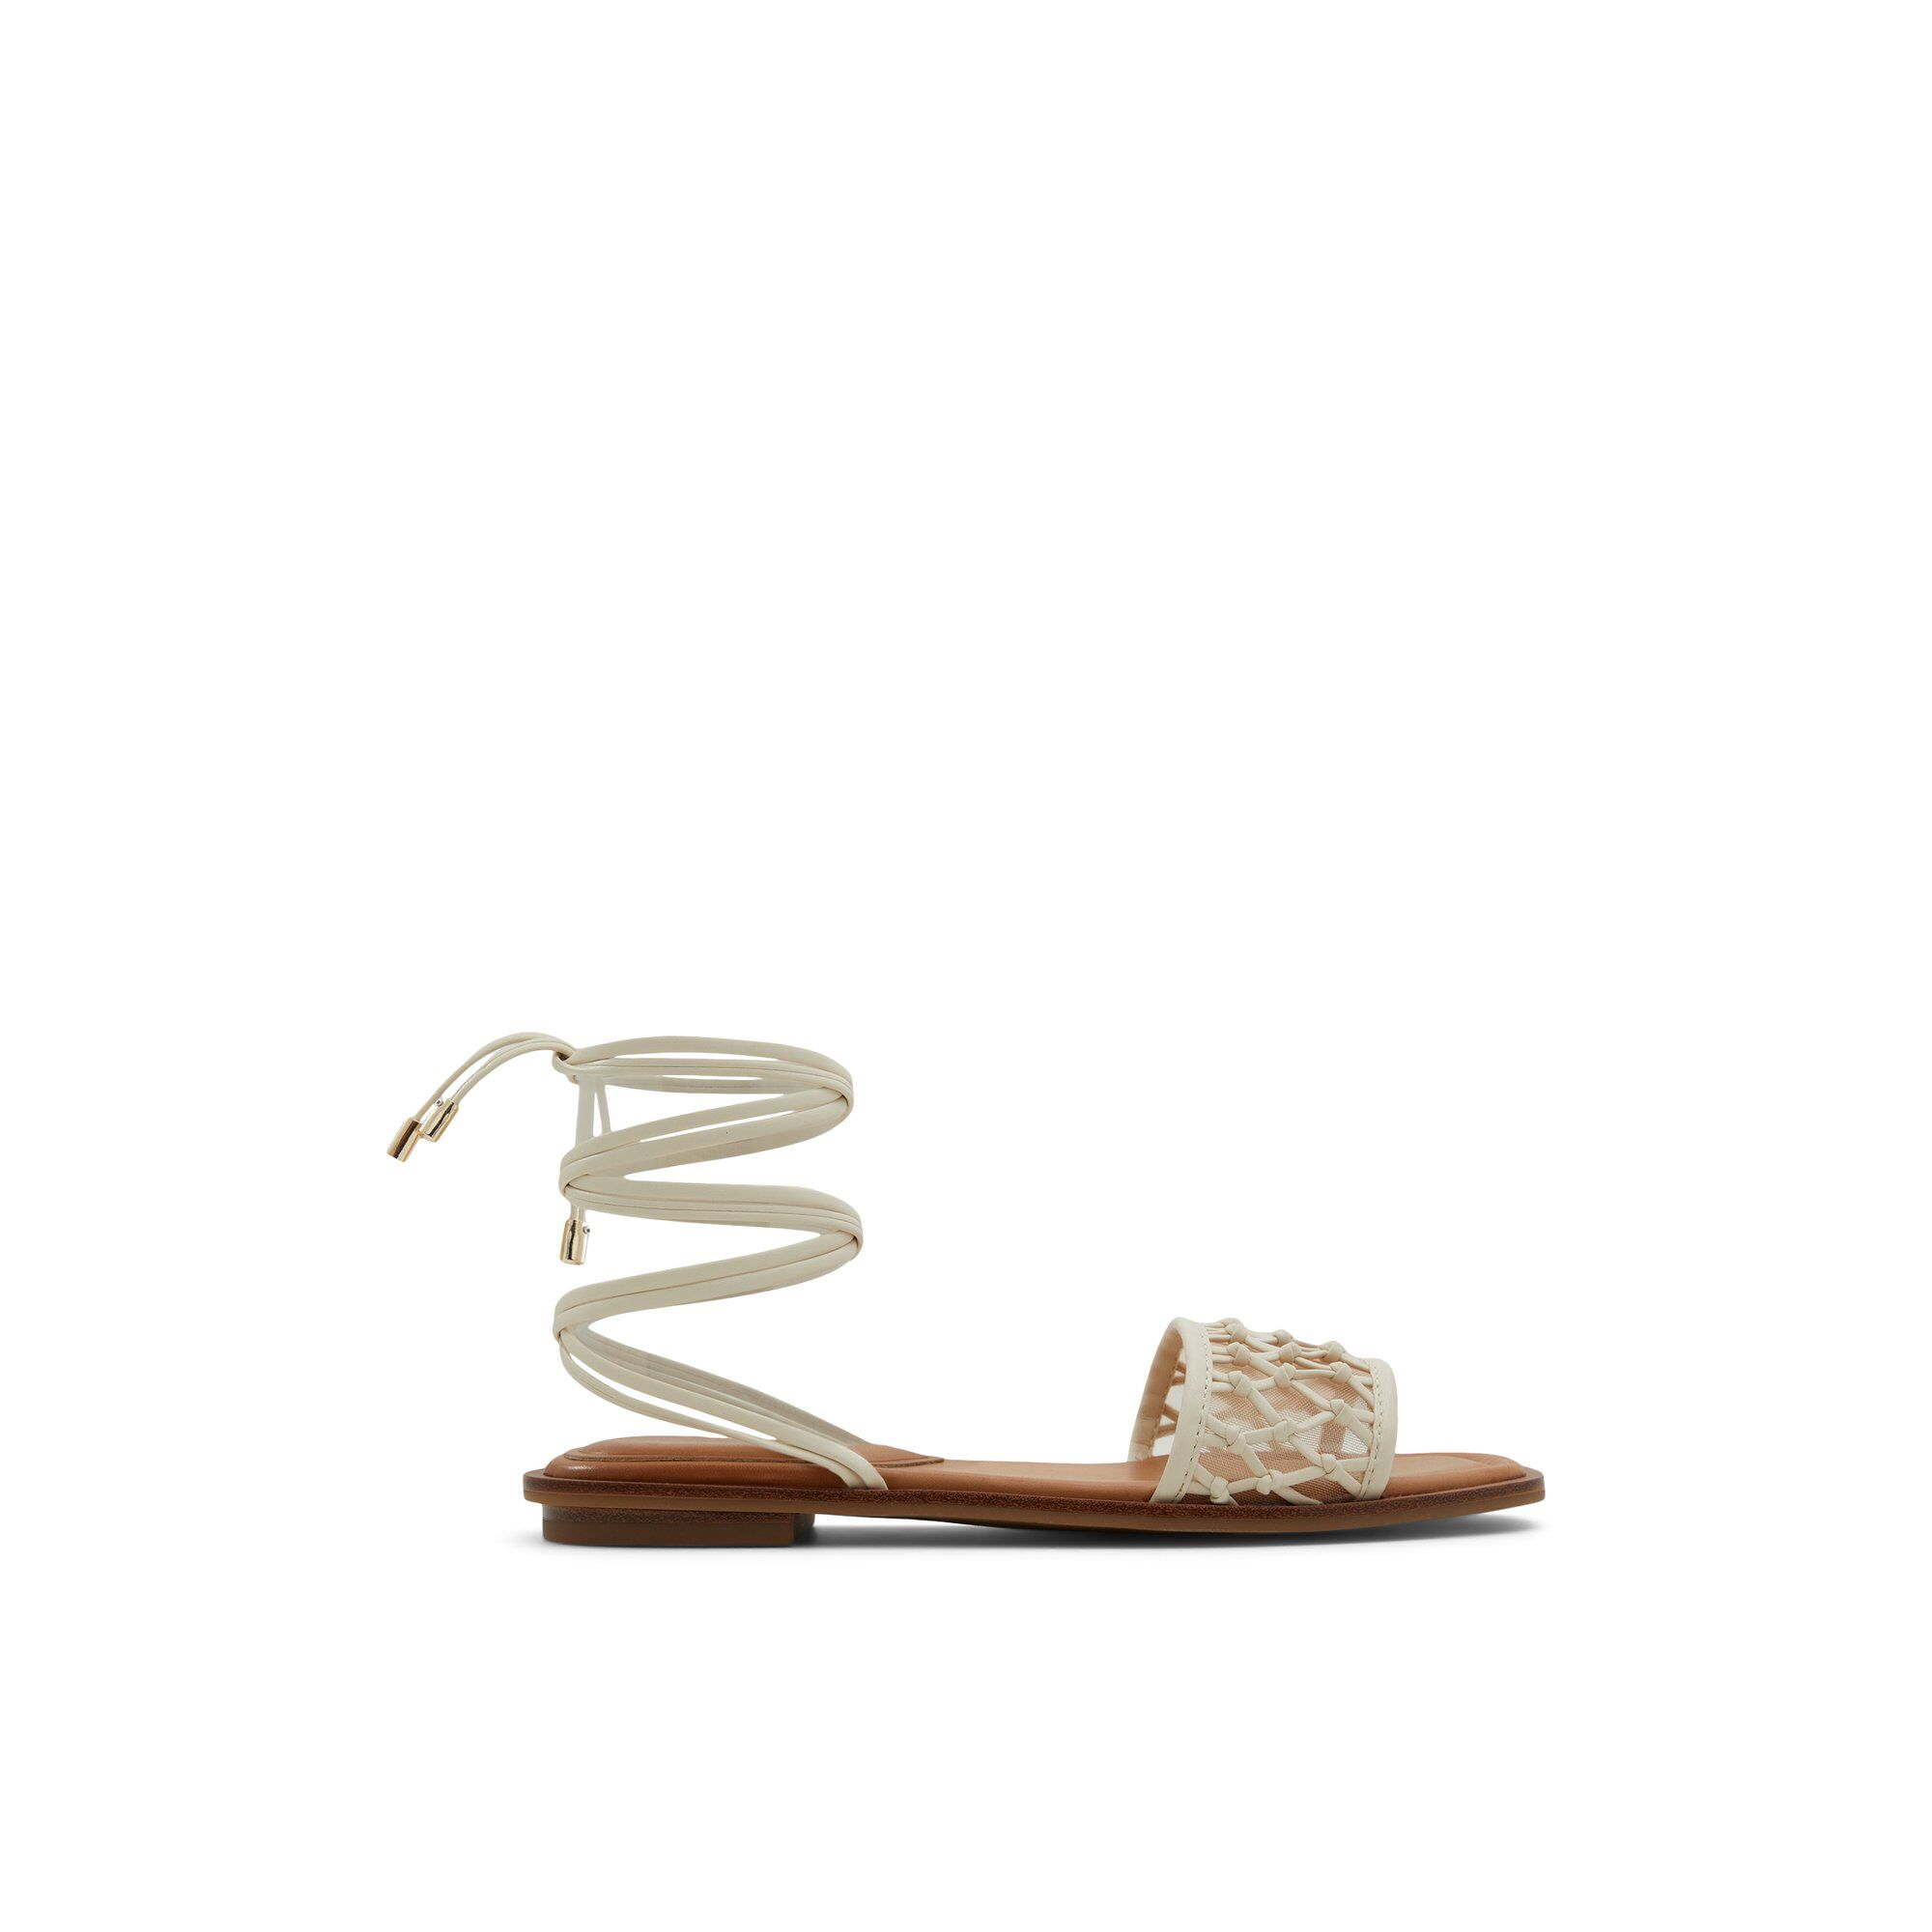 ALDO Seazen - Women's Flat Sandals - White, Size 7.5